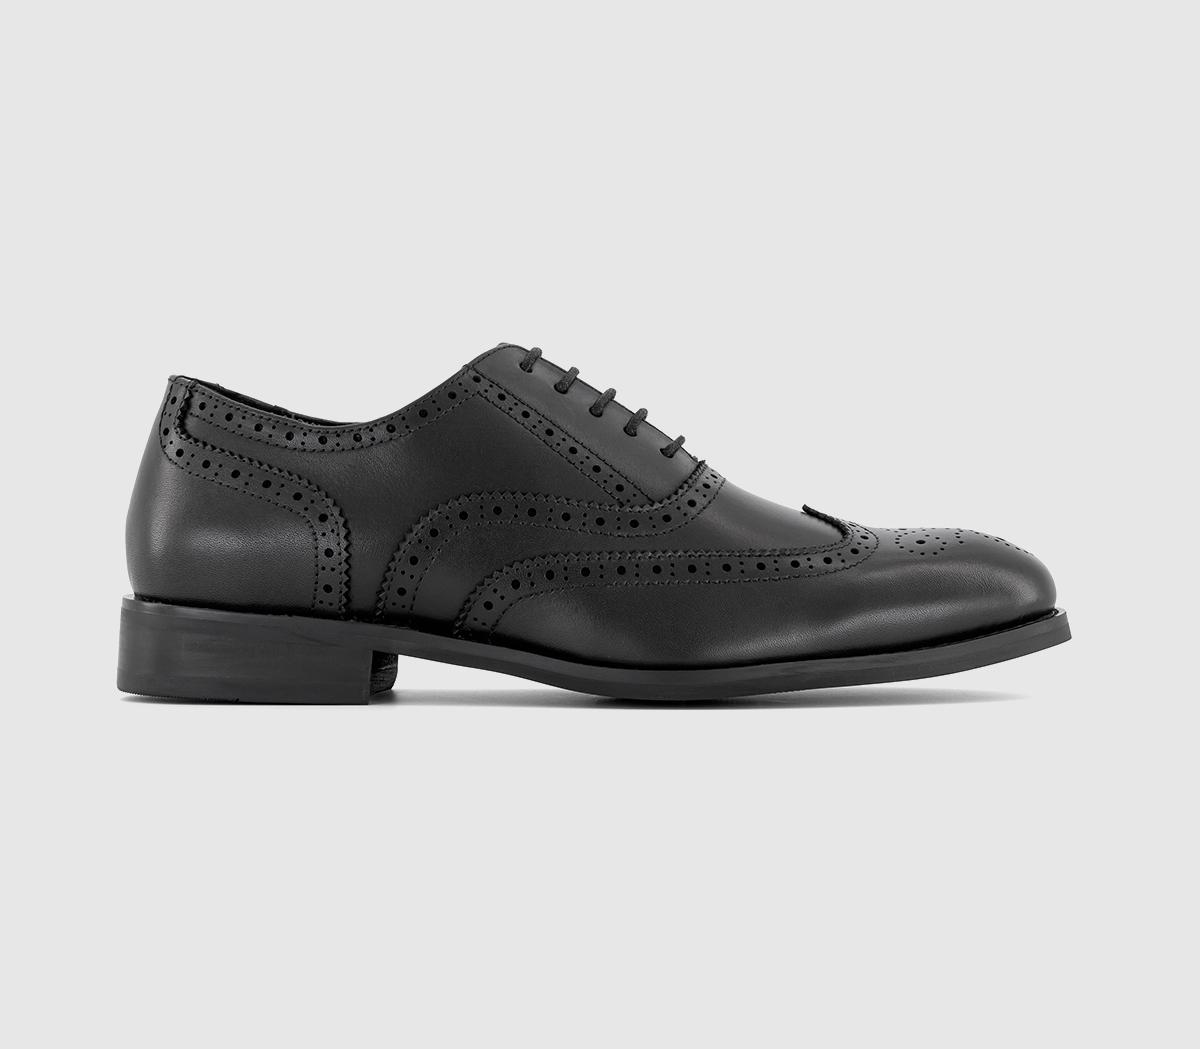 OFFICEMilton Oxford Brogue ShoesBlack Leather